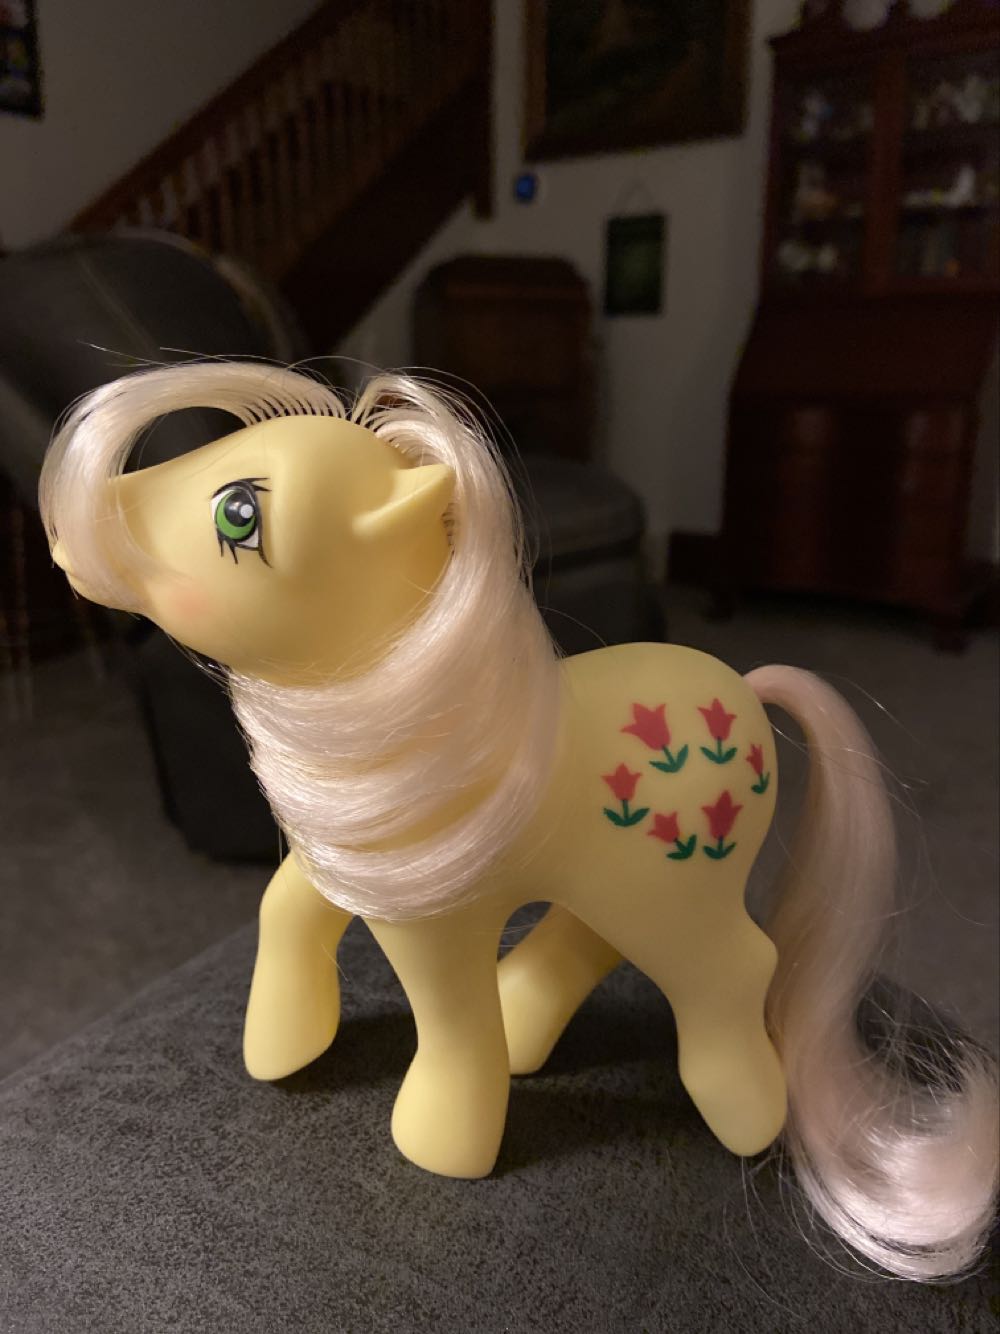 Posey (European) - Hasbro (My Little Pony G1) action figure collectible - Main Image 1